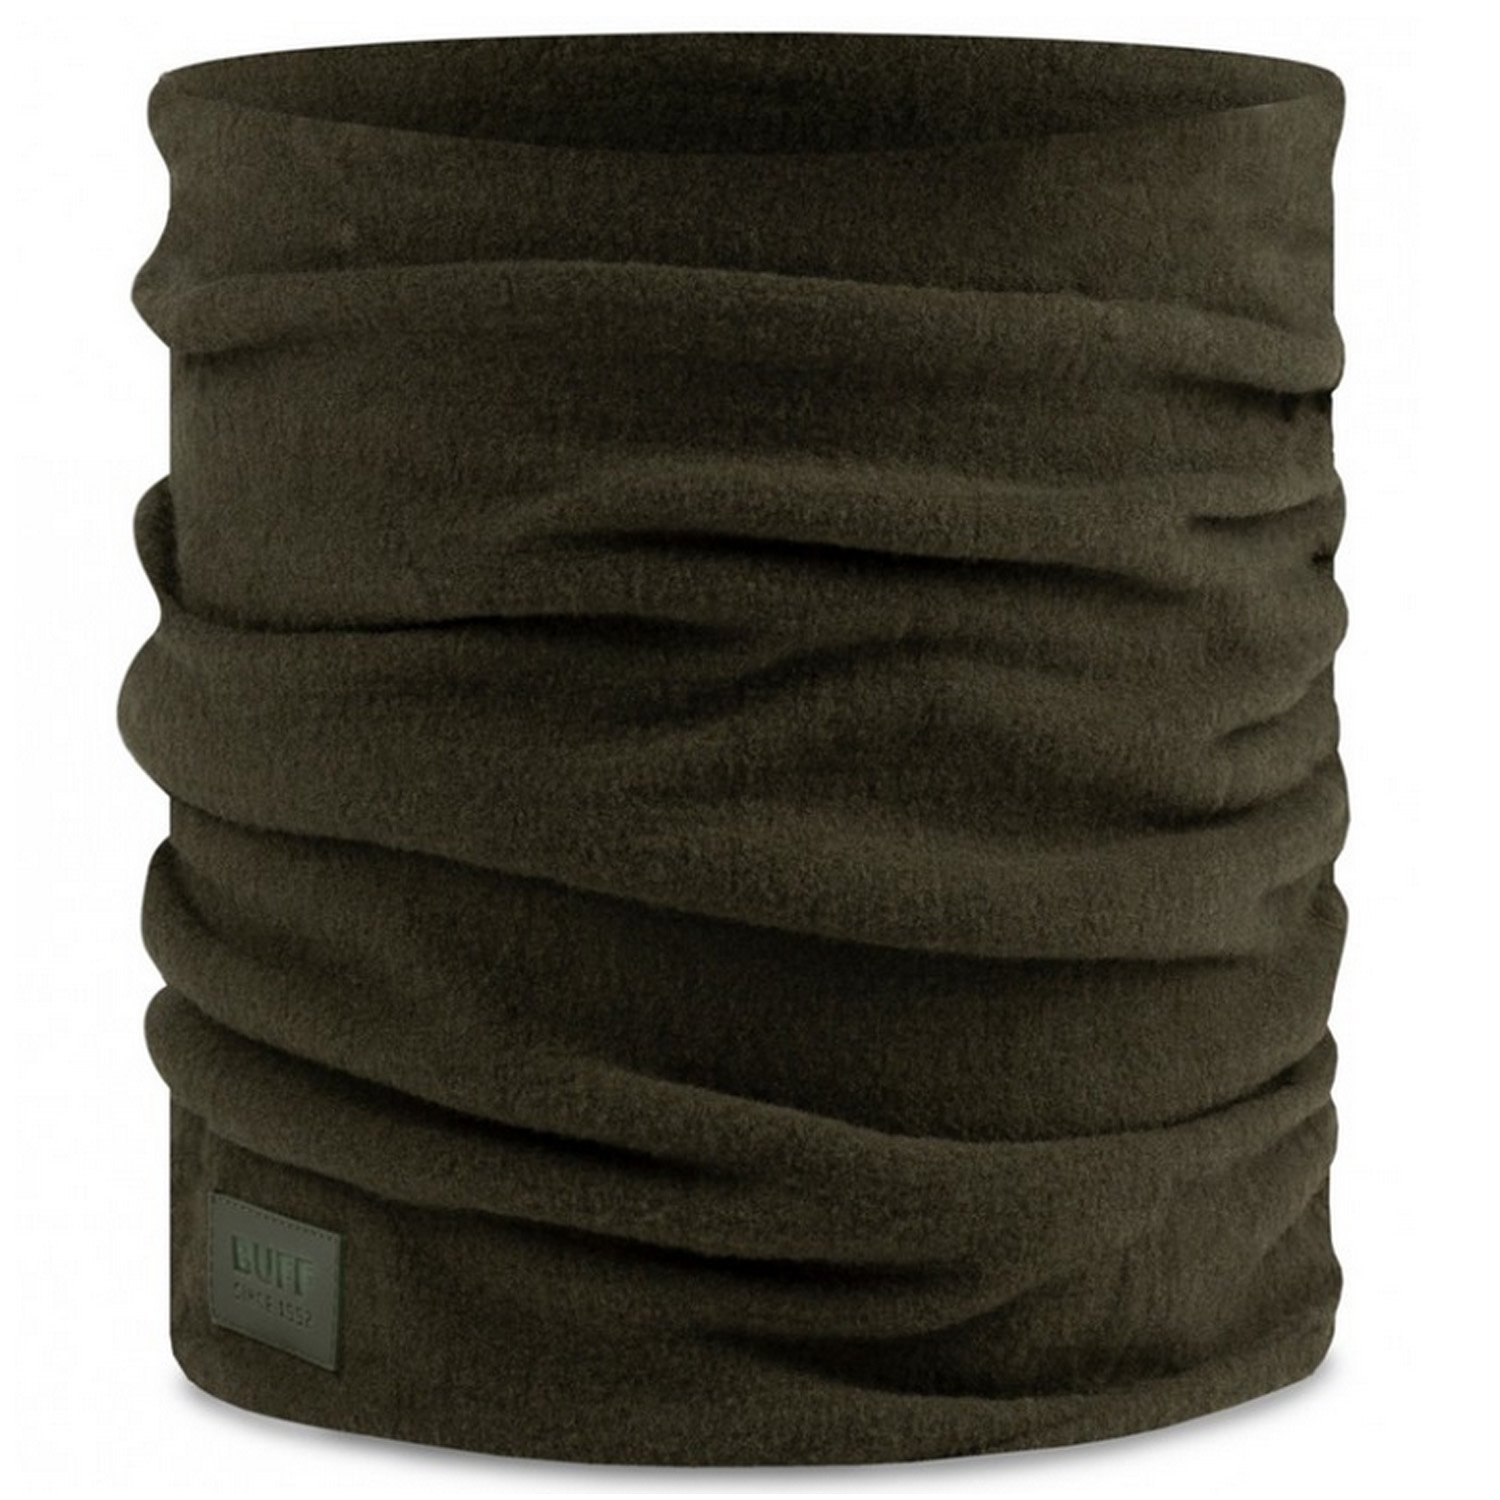 Бандана Buff Merino Fleece Neckwarmer Solid Khaki, унисекс, зеленый, 2022, 124119.854.10.00 бандана buff polar thermal neckwarmer solid blush 115390 505 10 00